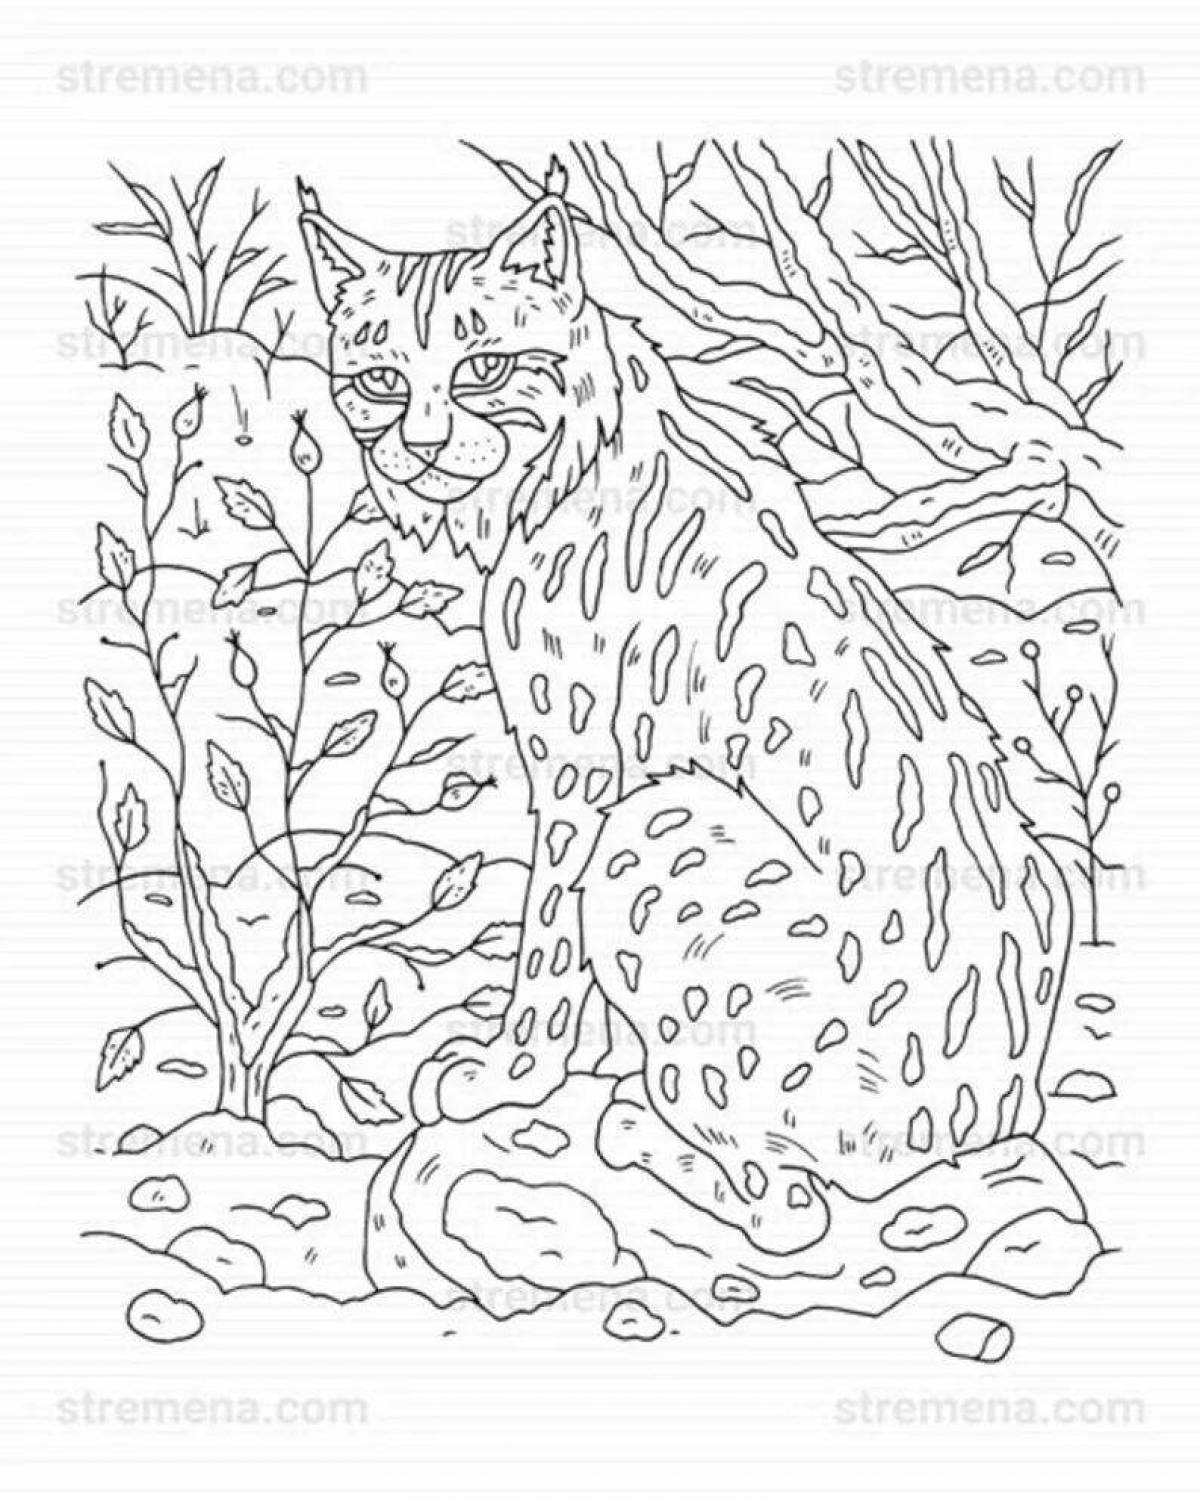 A wonderful coloring antistress lynx